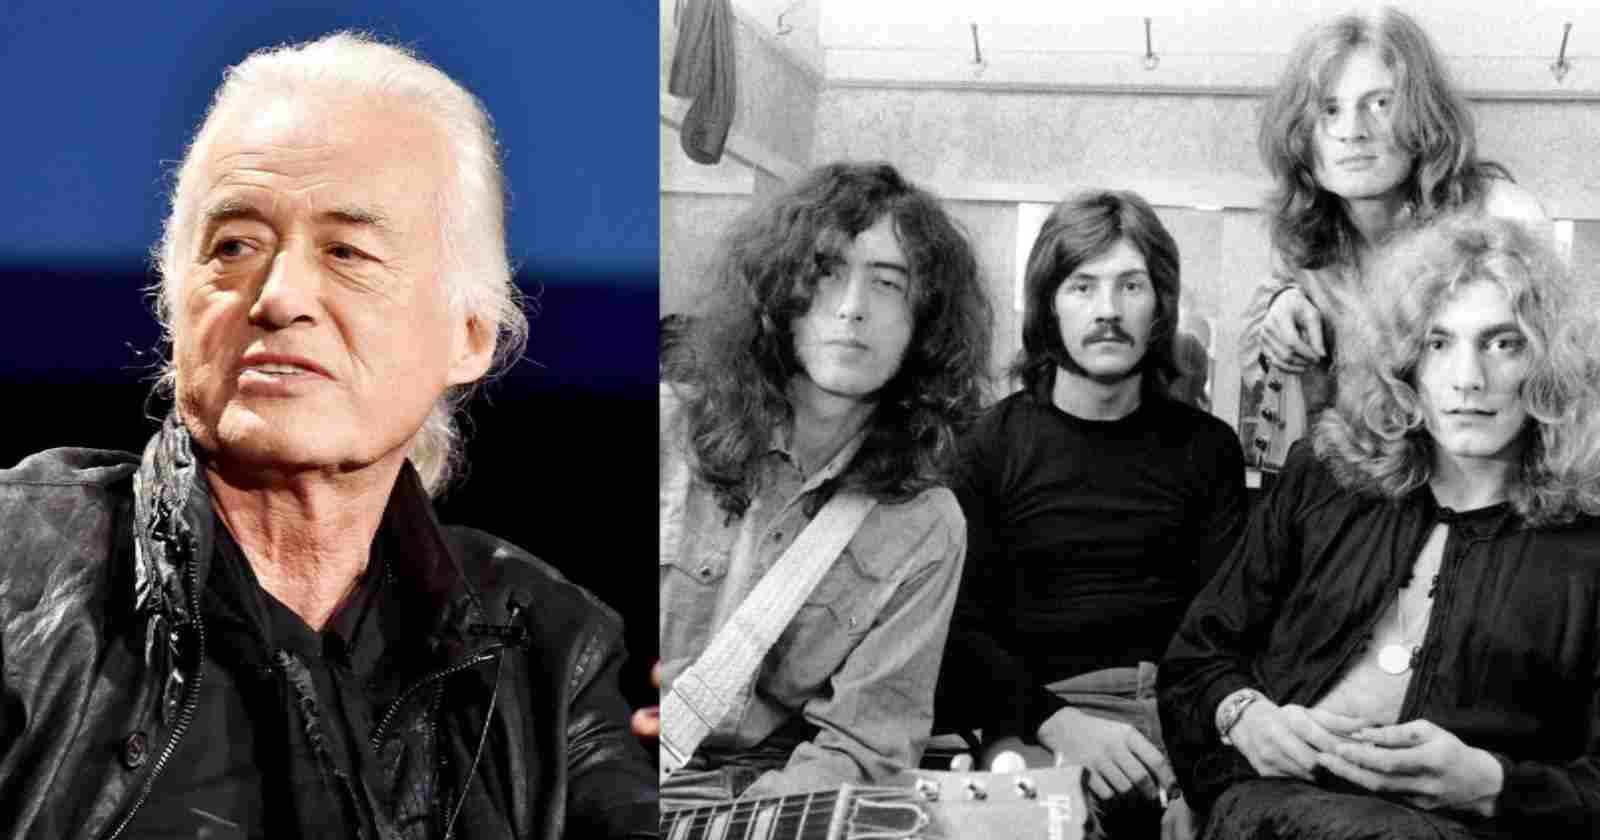 Jimmy Page reveals Led Zeppelin plans right before John Bonham's death